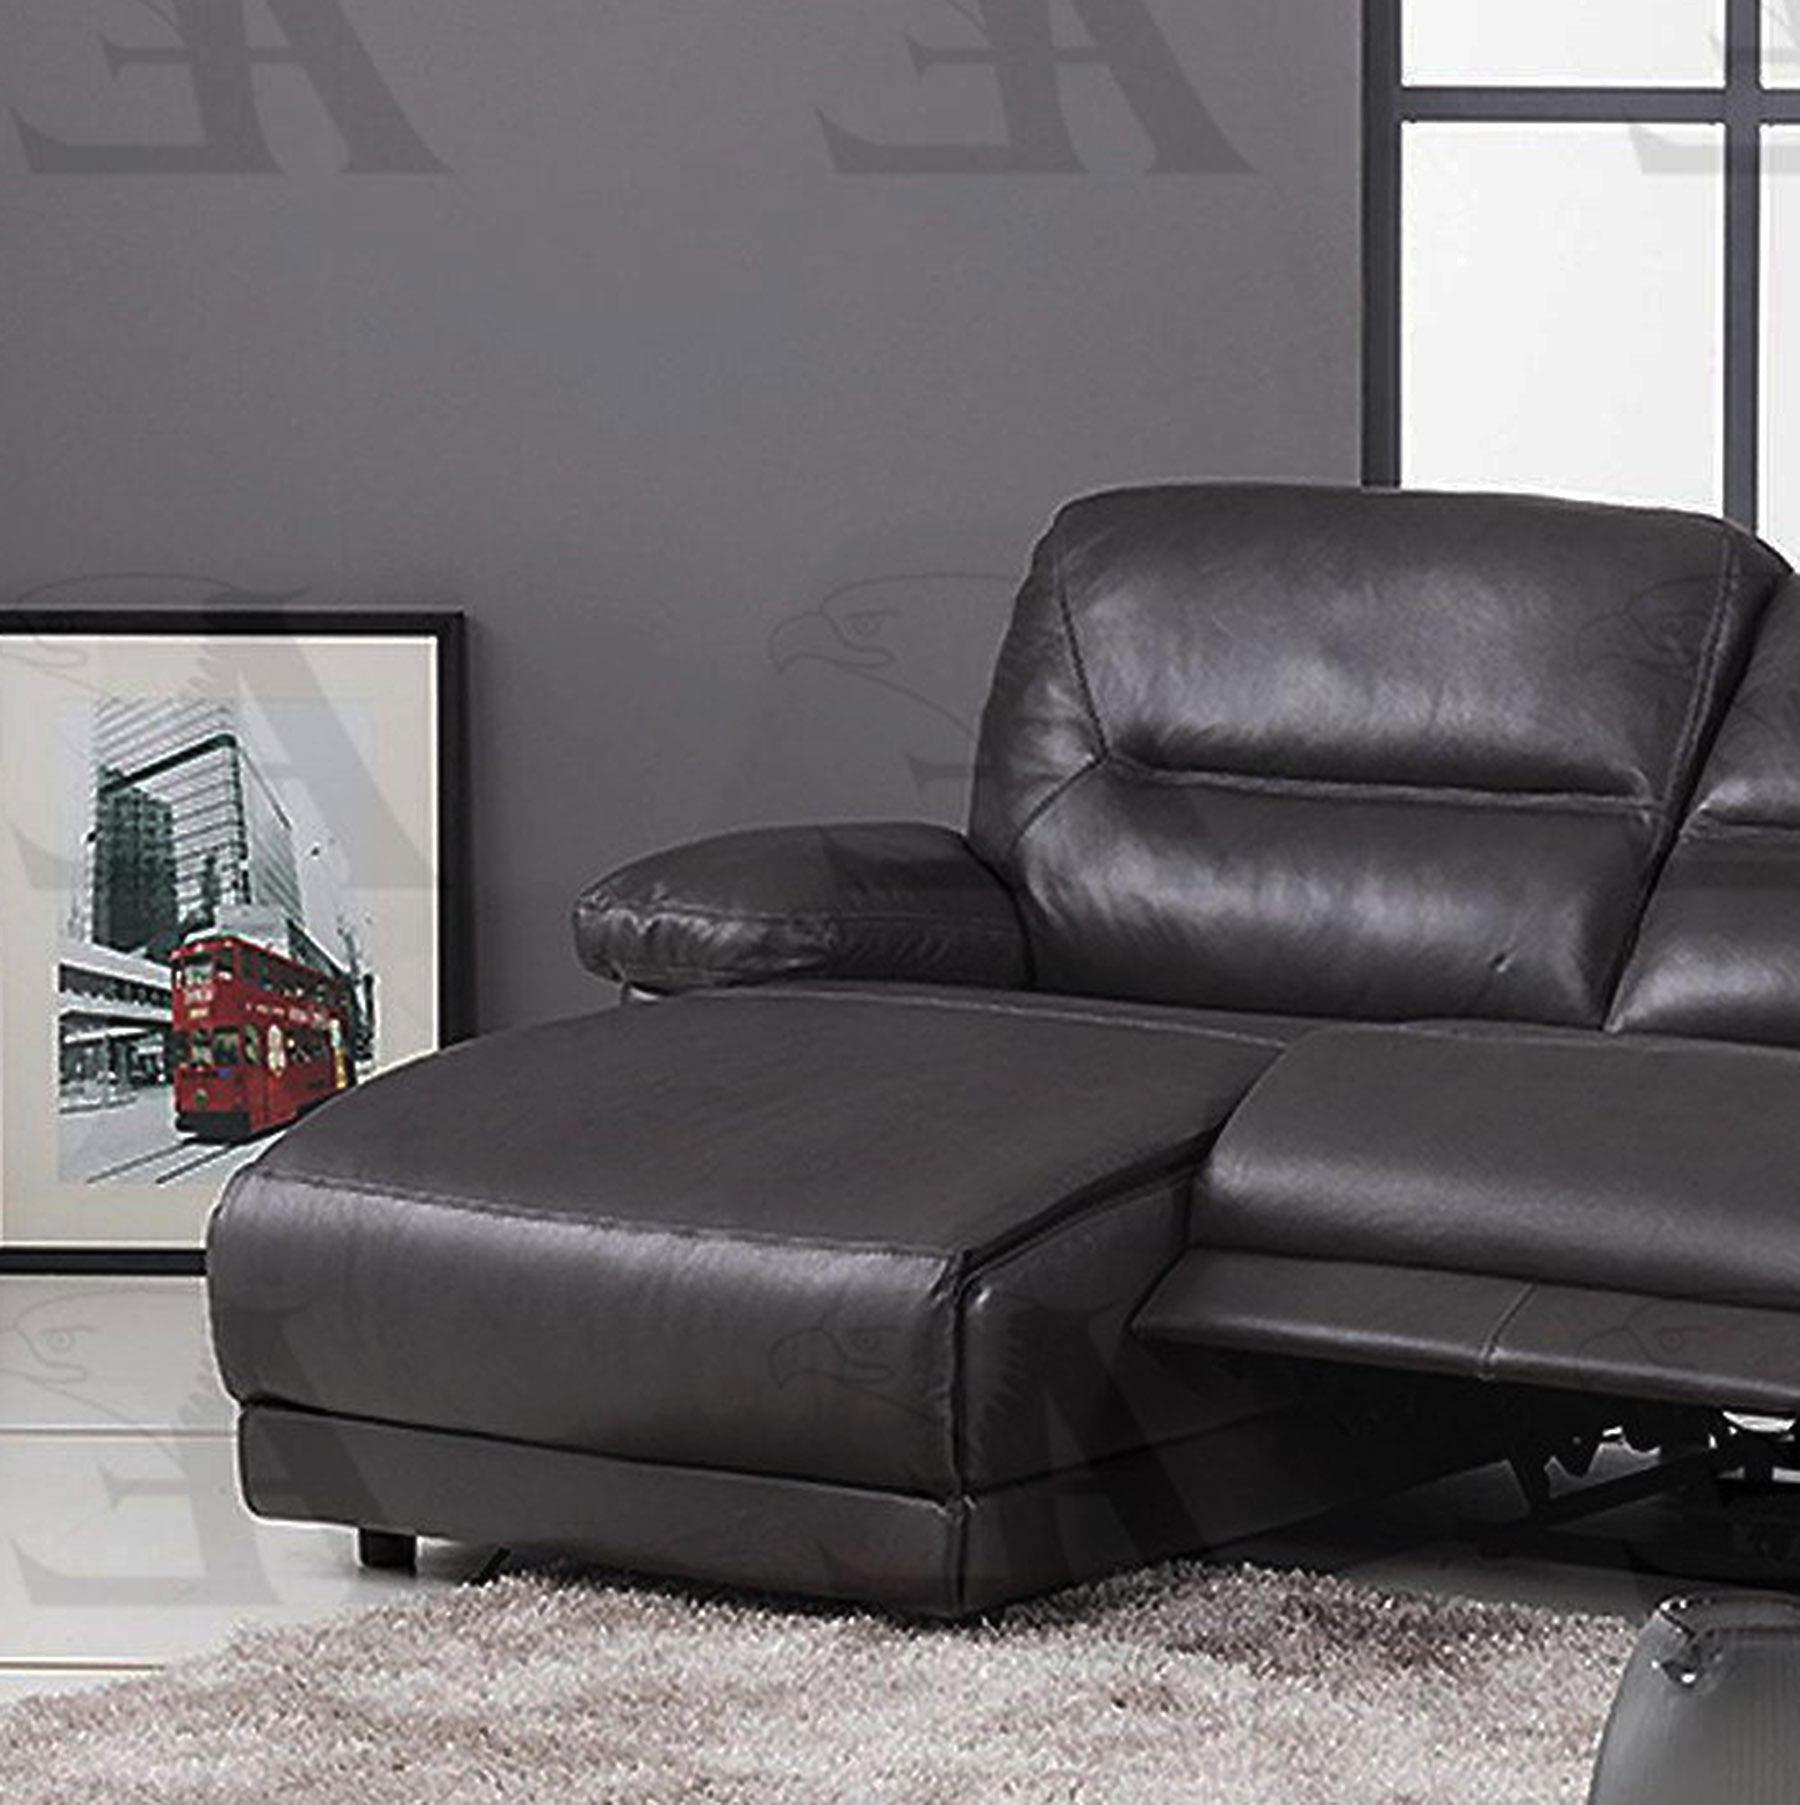 

    
American Eagle Furniture EK-L079-DG Dark Gray Sectional Recliner Sofa Chaise Left Hand Chase Full Leather 2Pcs
